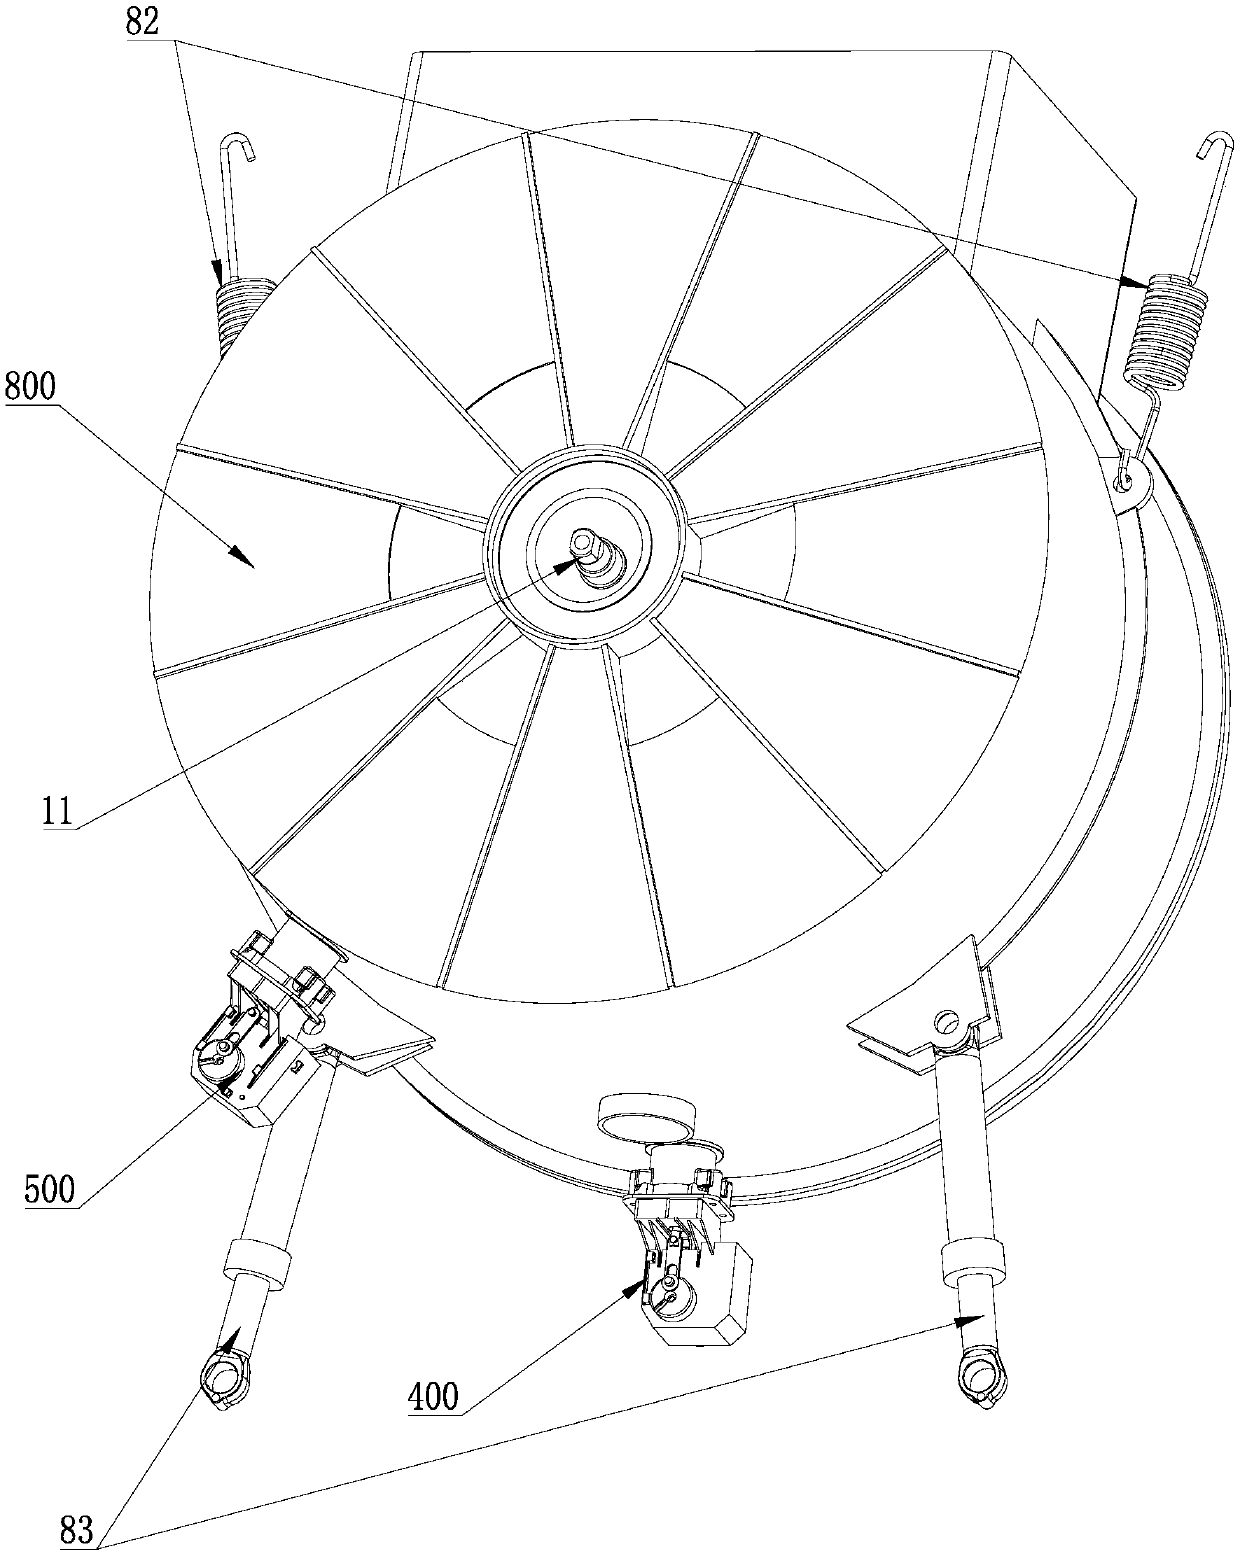 Breather valve applied to non-porous drum and drum washing machine